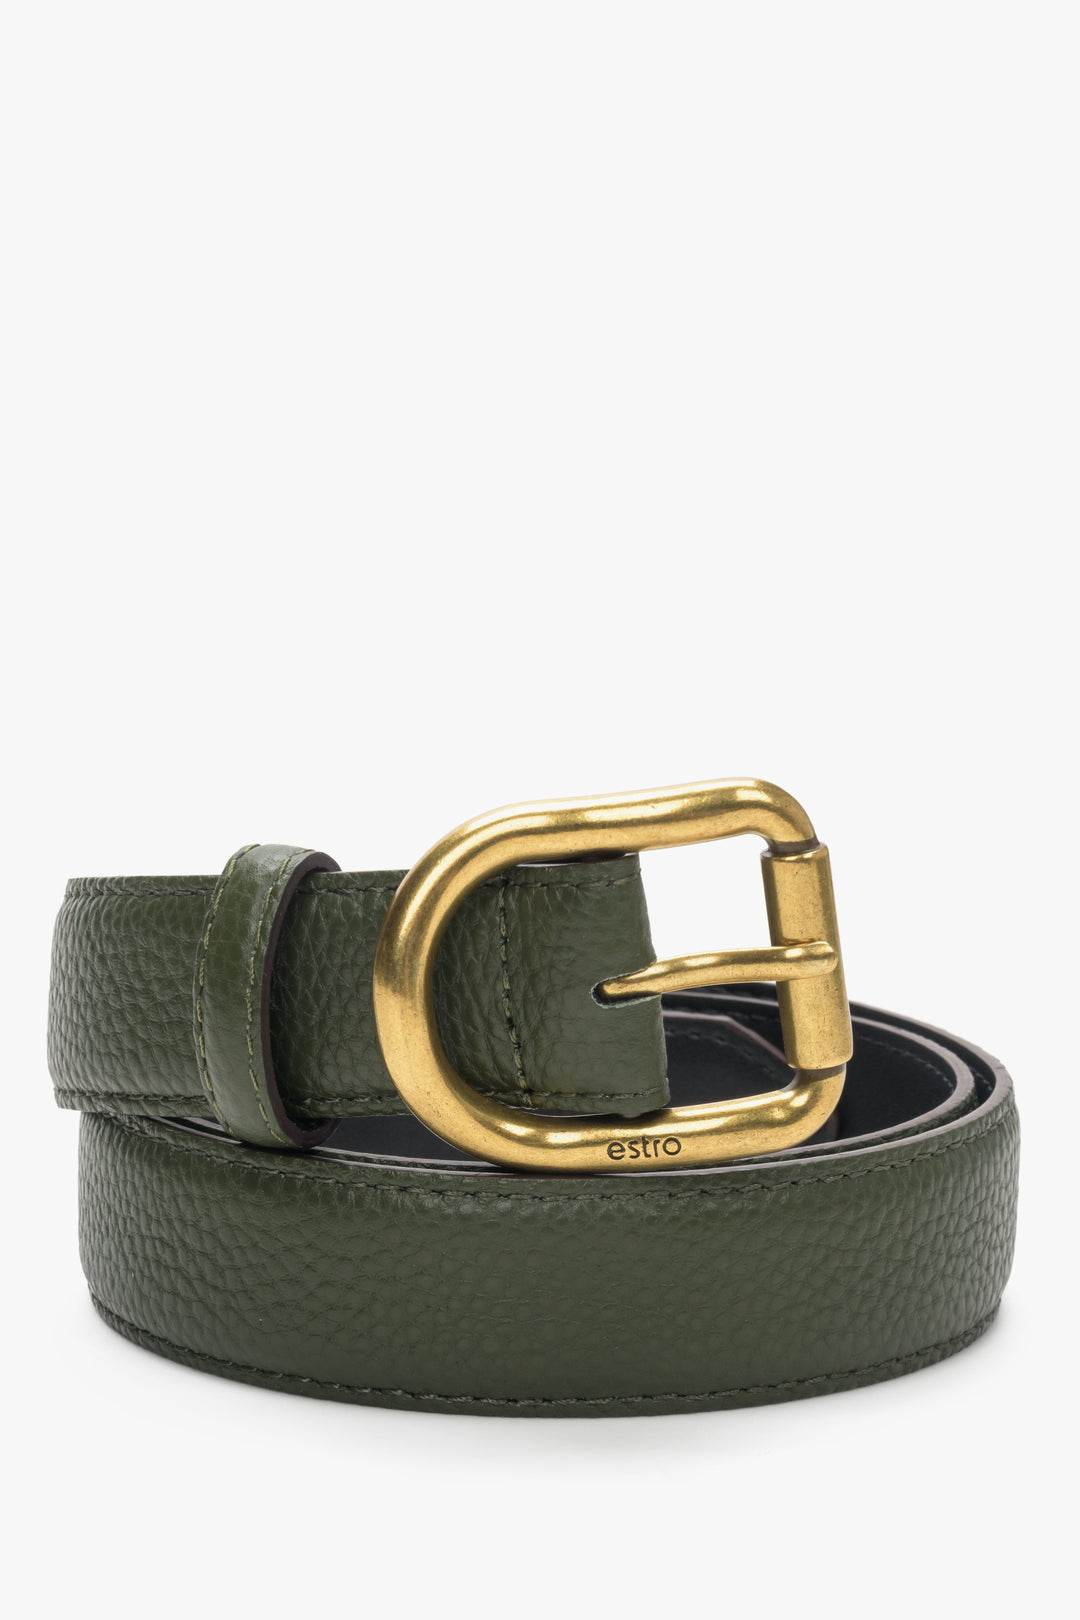 Green women's belt with gold buckle Estro.